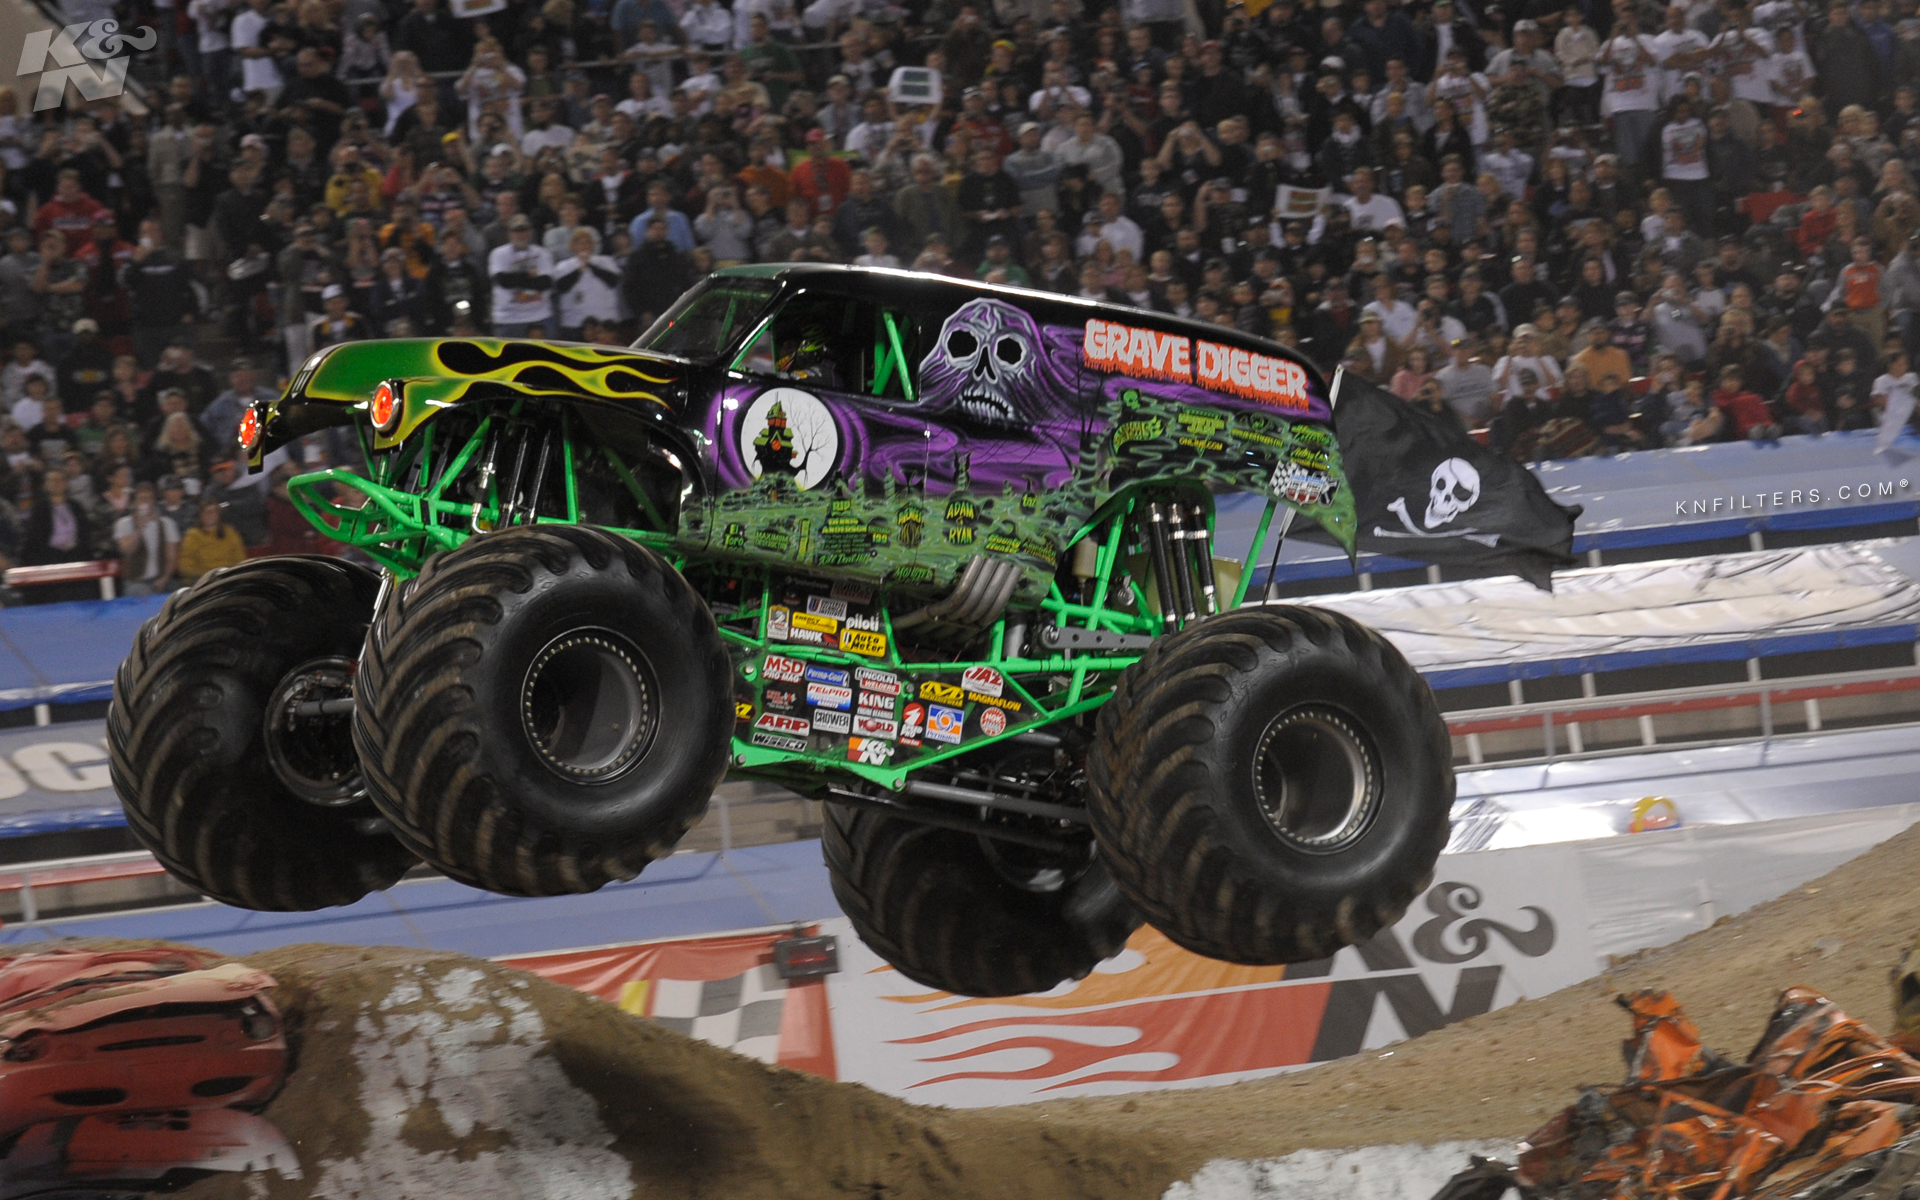  monster truck 4x4 race racing monster truck j wallpaper background